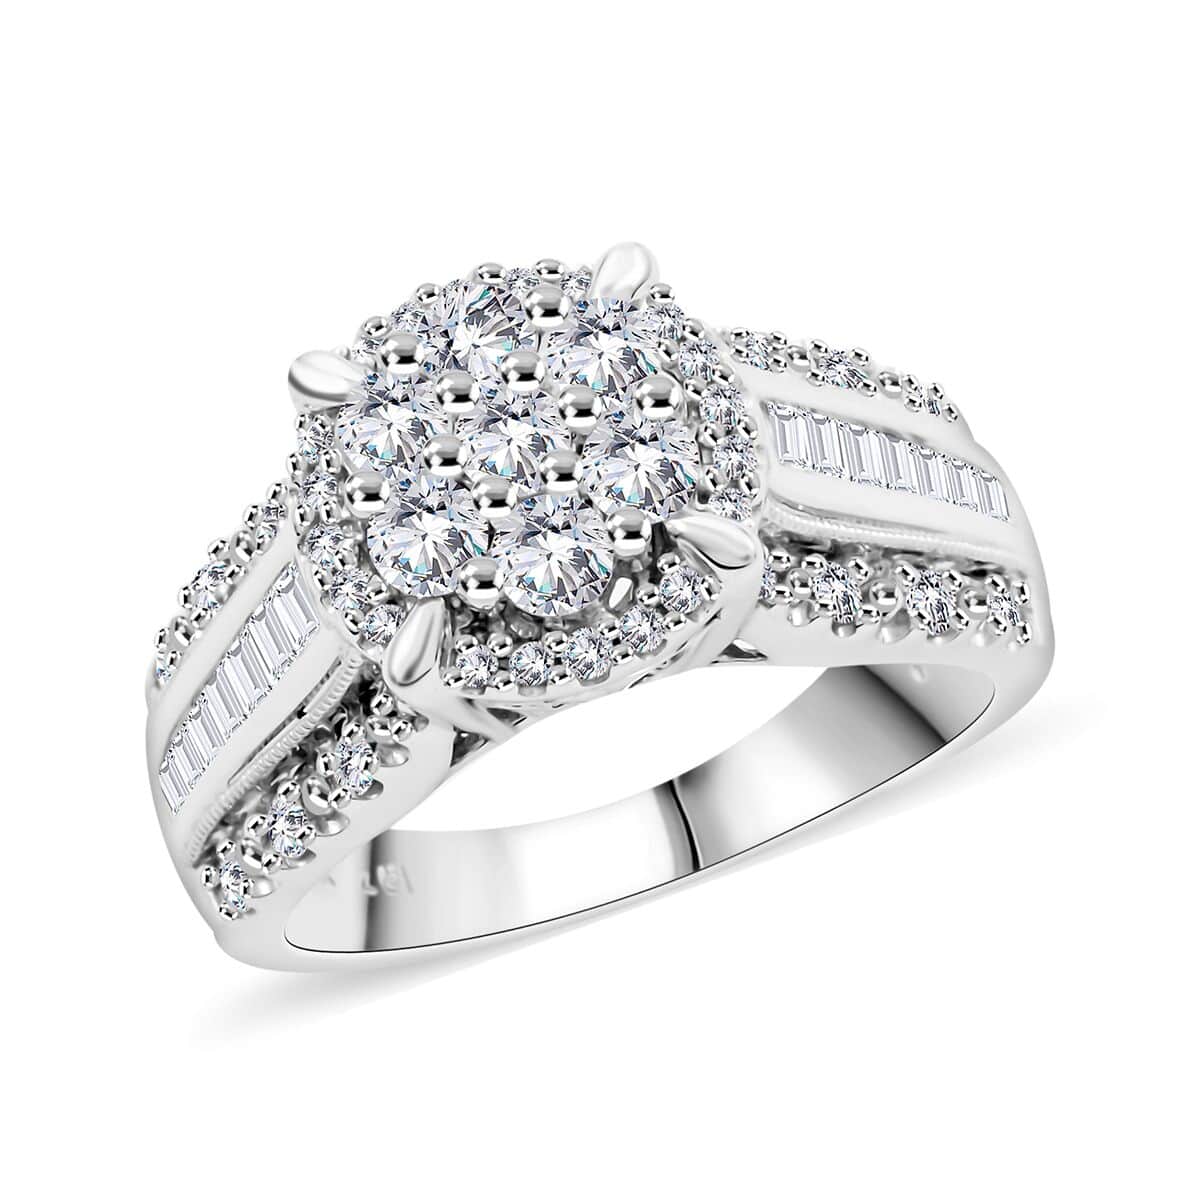 10K White Gold Diamond I2-I3 Ring (Size 6.0) 5.85 Grams 1.00 ctw (Del. in 10-12 Days) image number 0